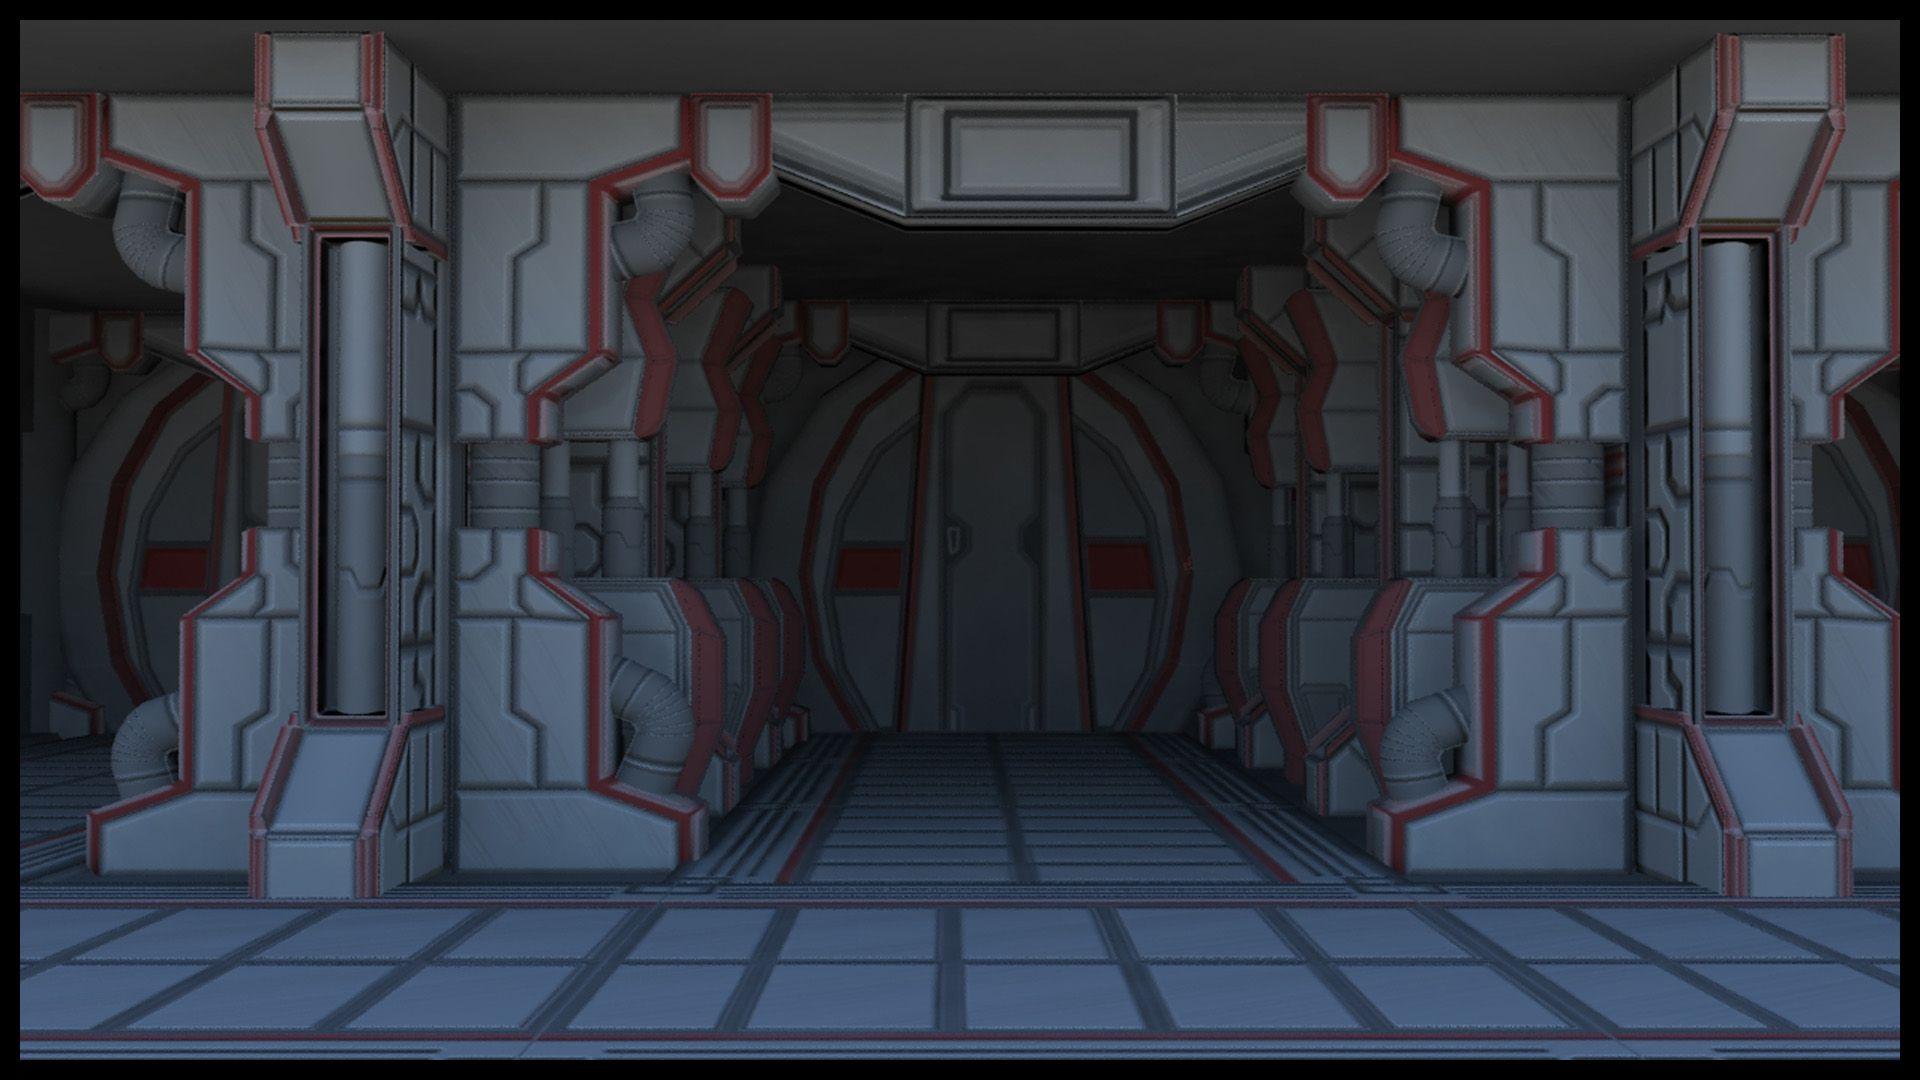 Futurisitc Interior (Inside a spaceship)